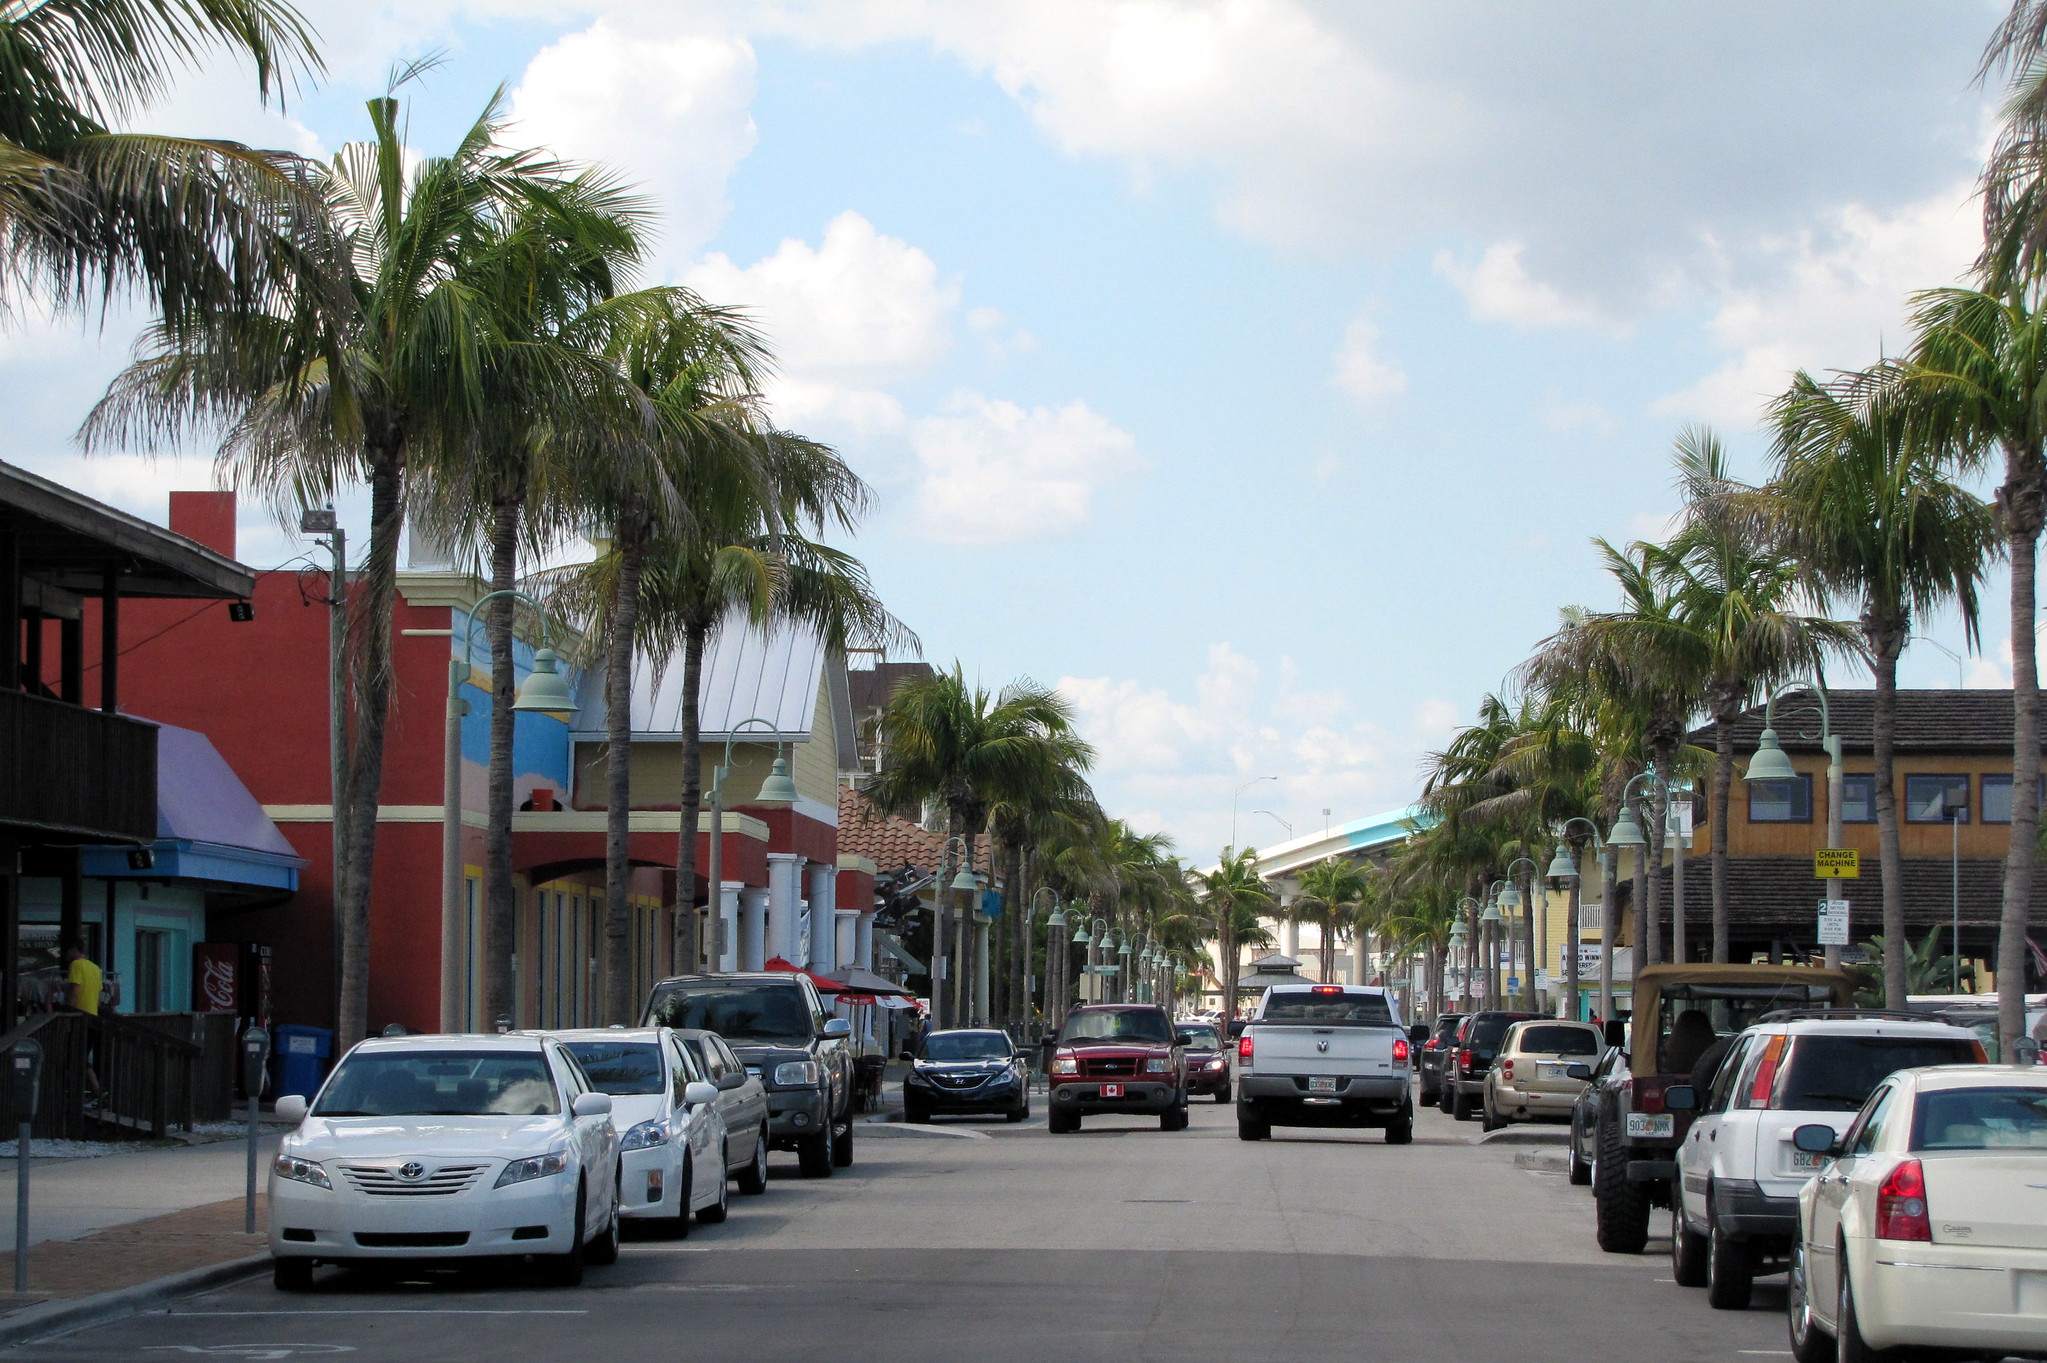 Car Rental / RV Rental in Fort Myers, FL: The best companies